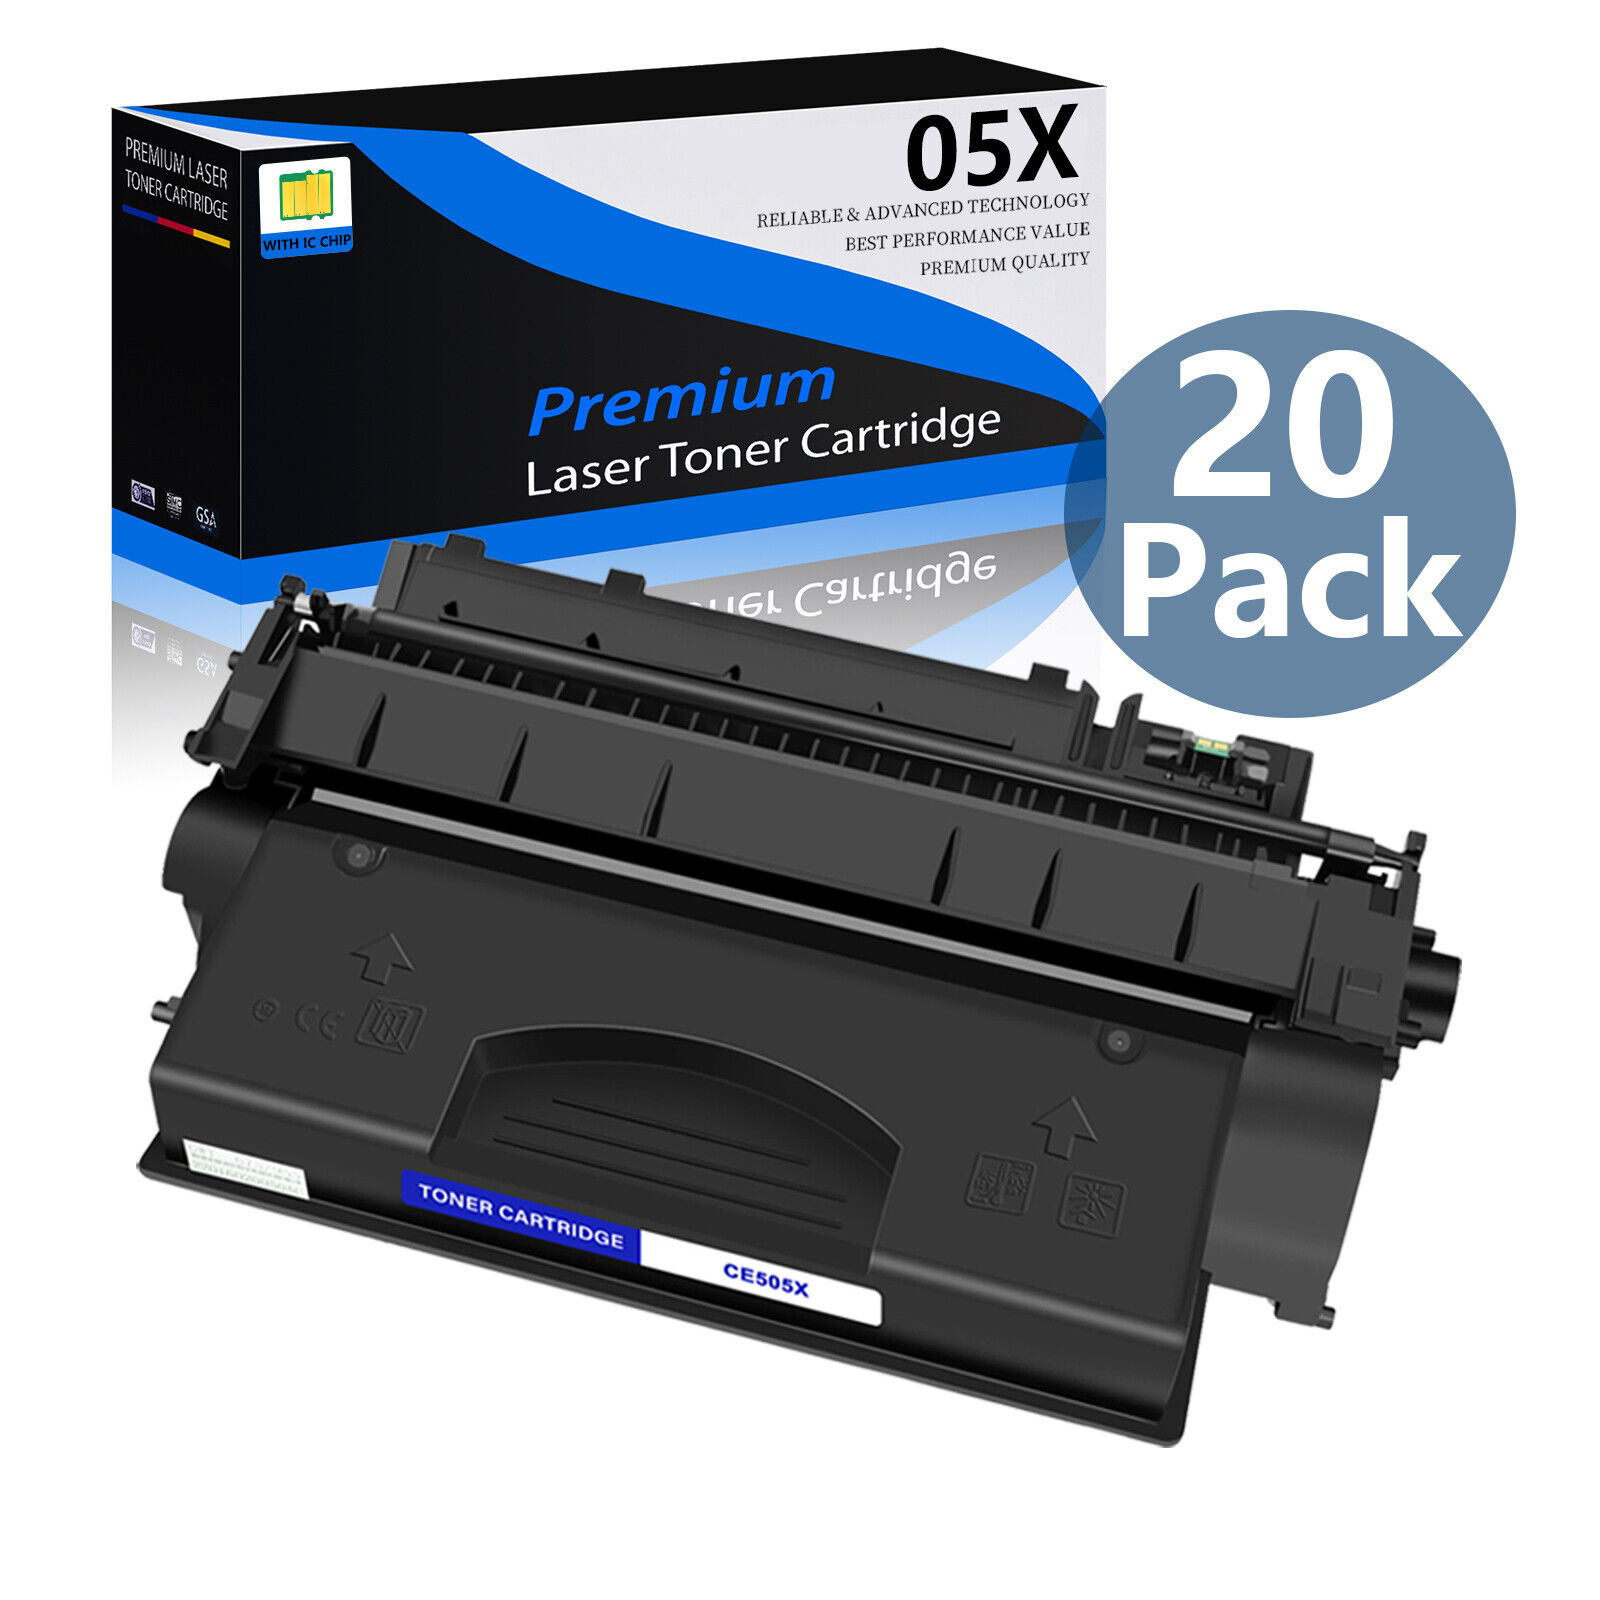 20PK High Yield Black CE505X 05X Toner Cartridge for HP LaserJet P2055d P2055dn